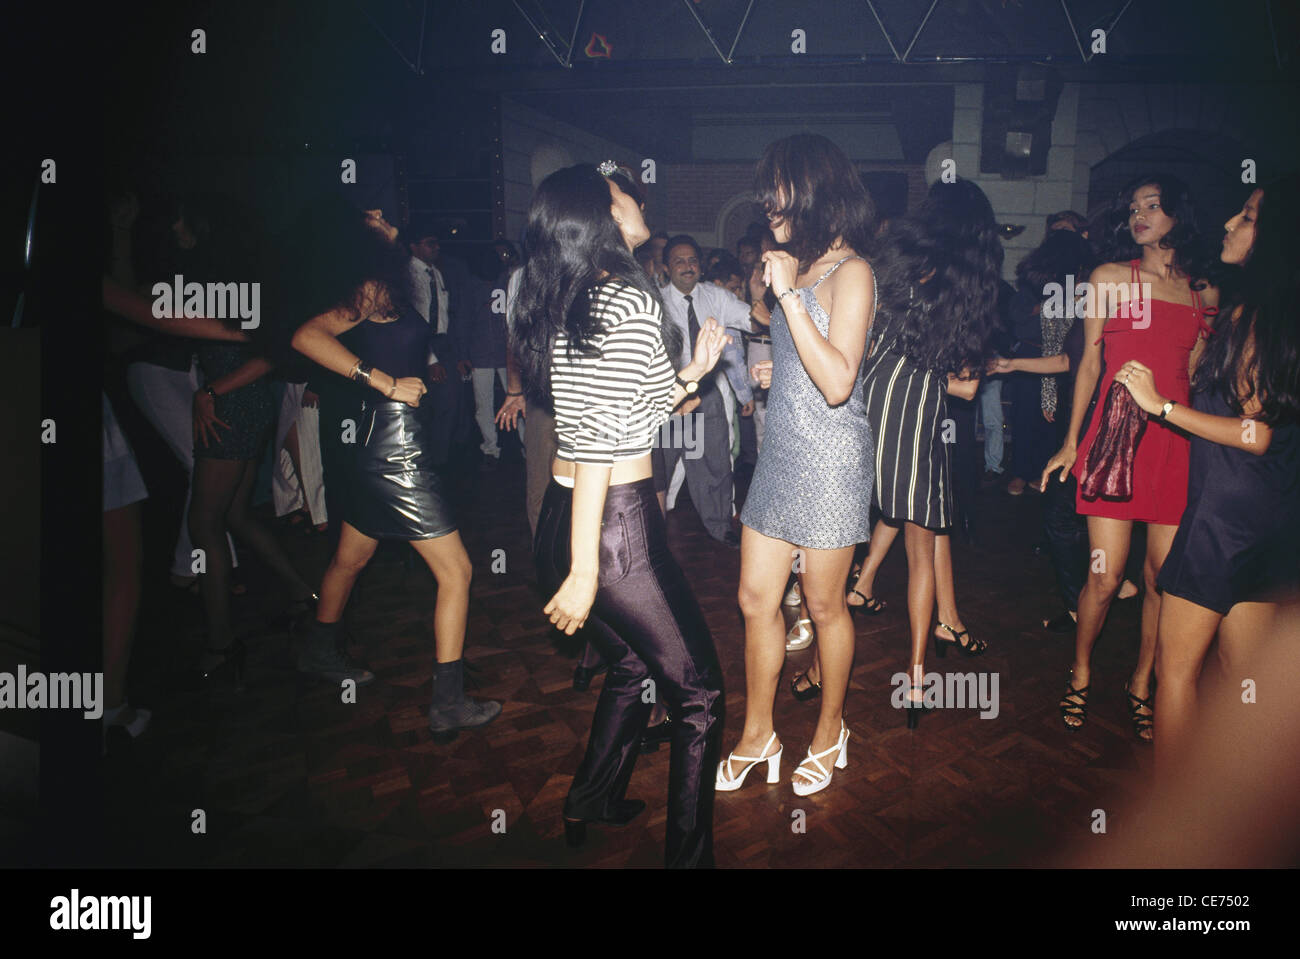 Chicas bailando en discoteca fotografías e imágenes de alta resolución -  Alamy